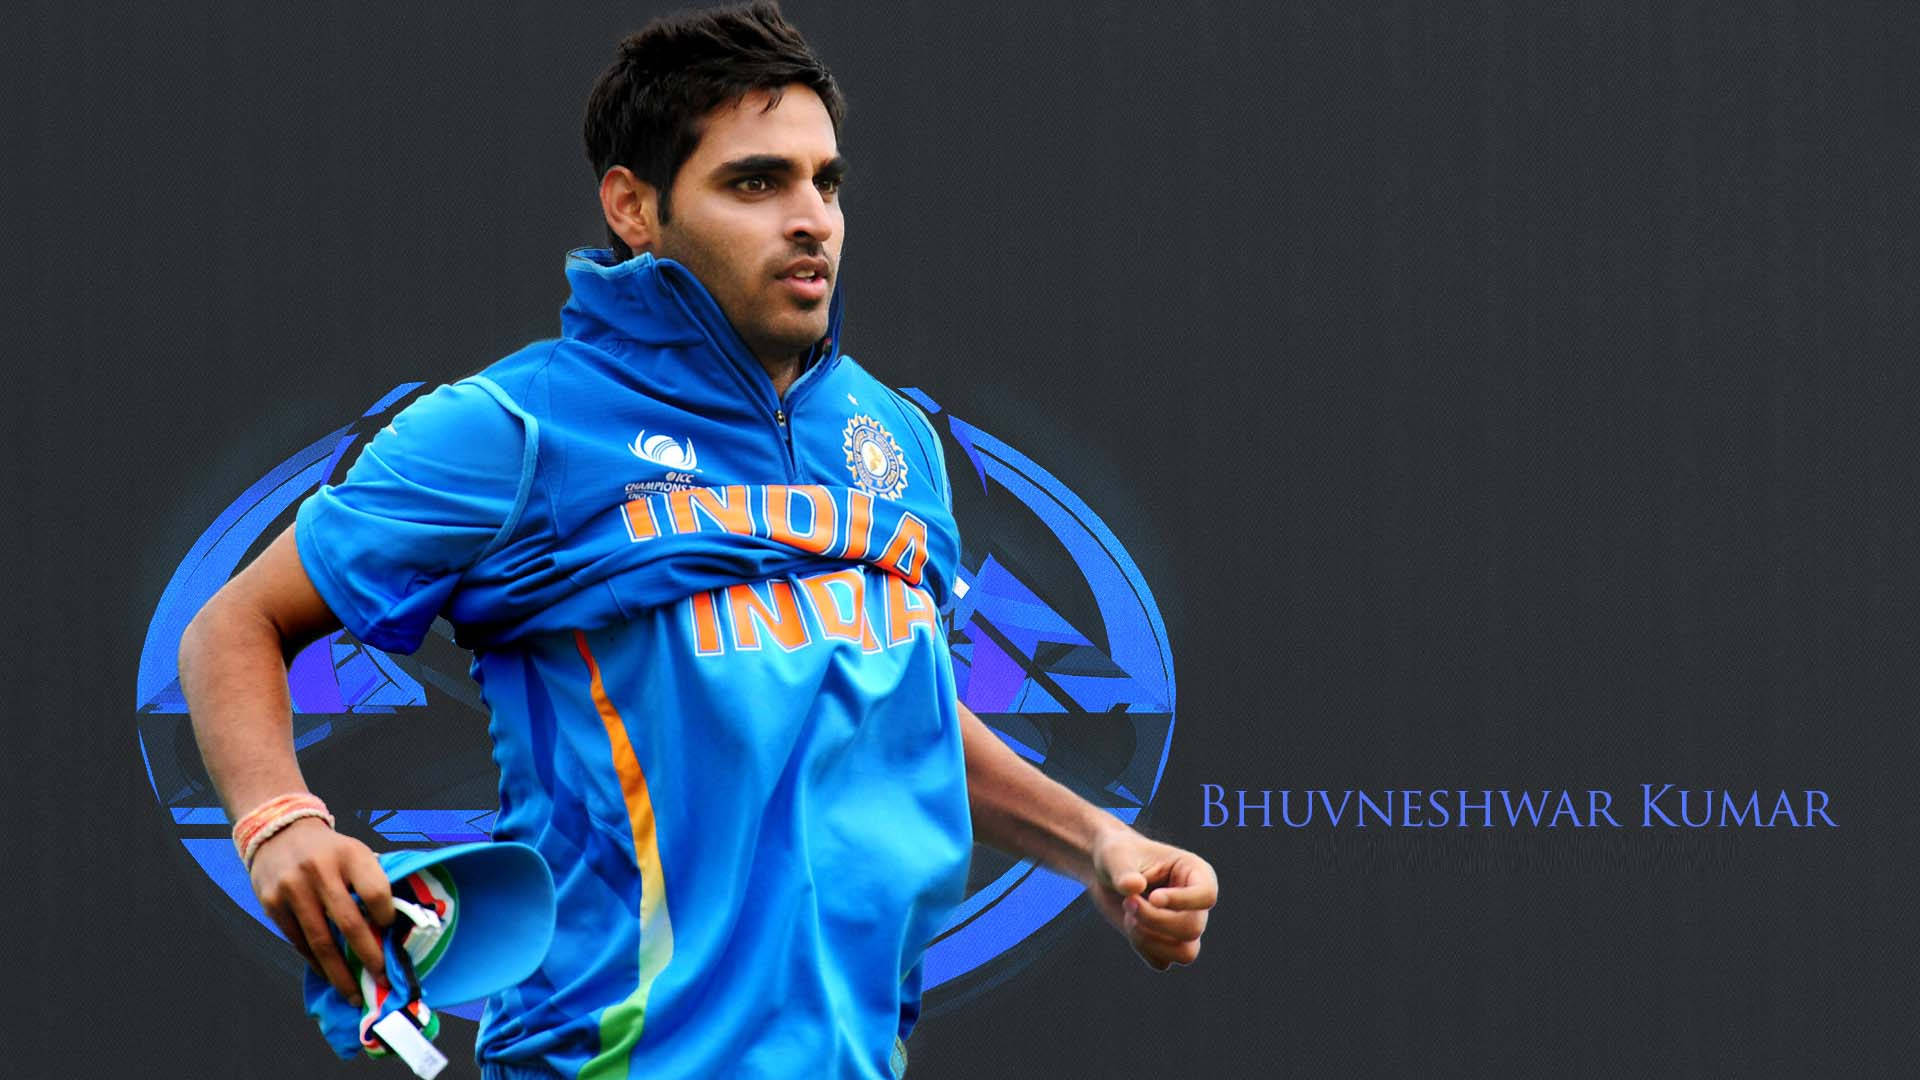 Indian Cricket Team Member Bhuvneshwar Kumar Wallpaper